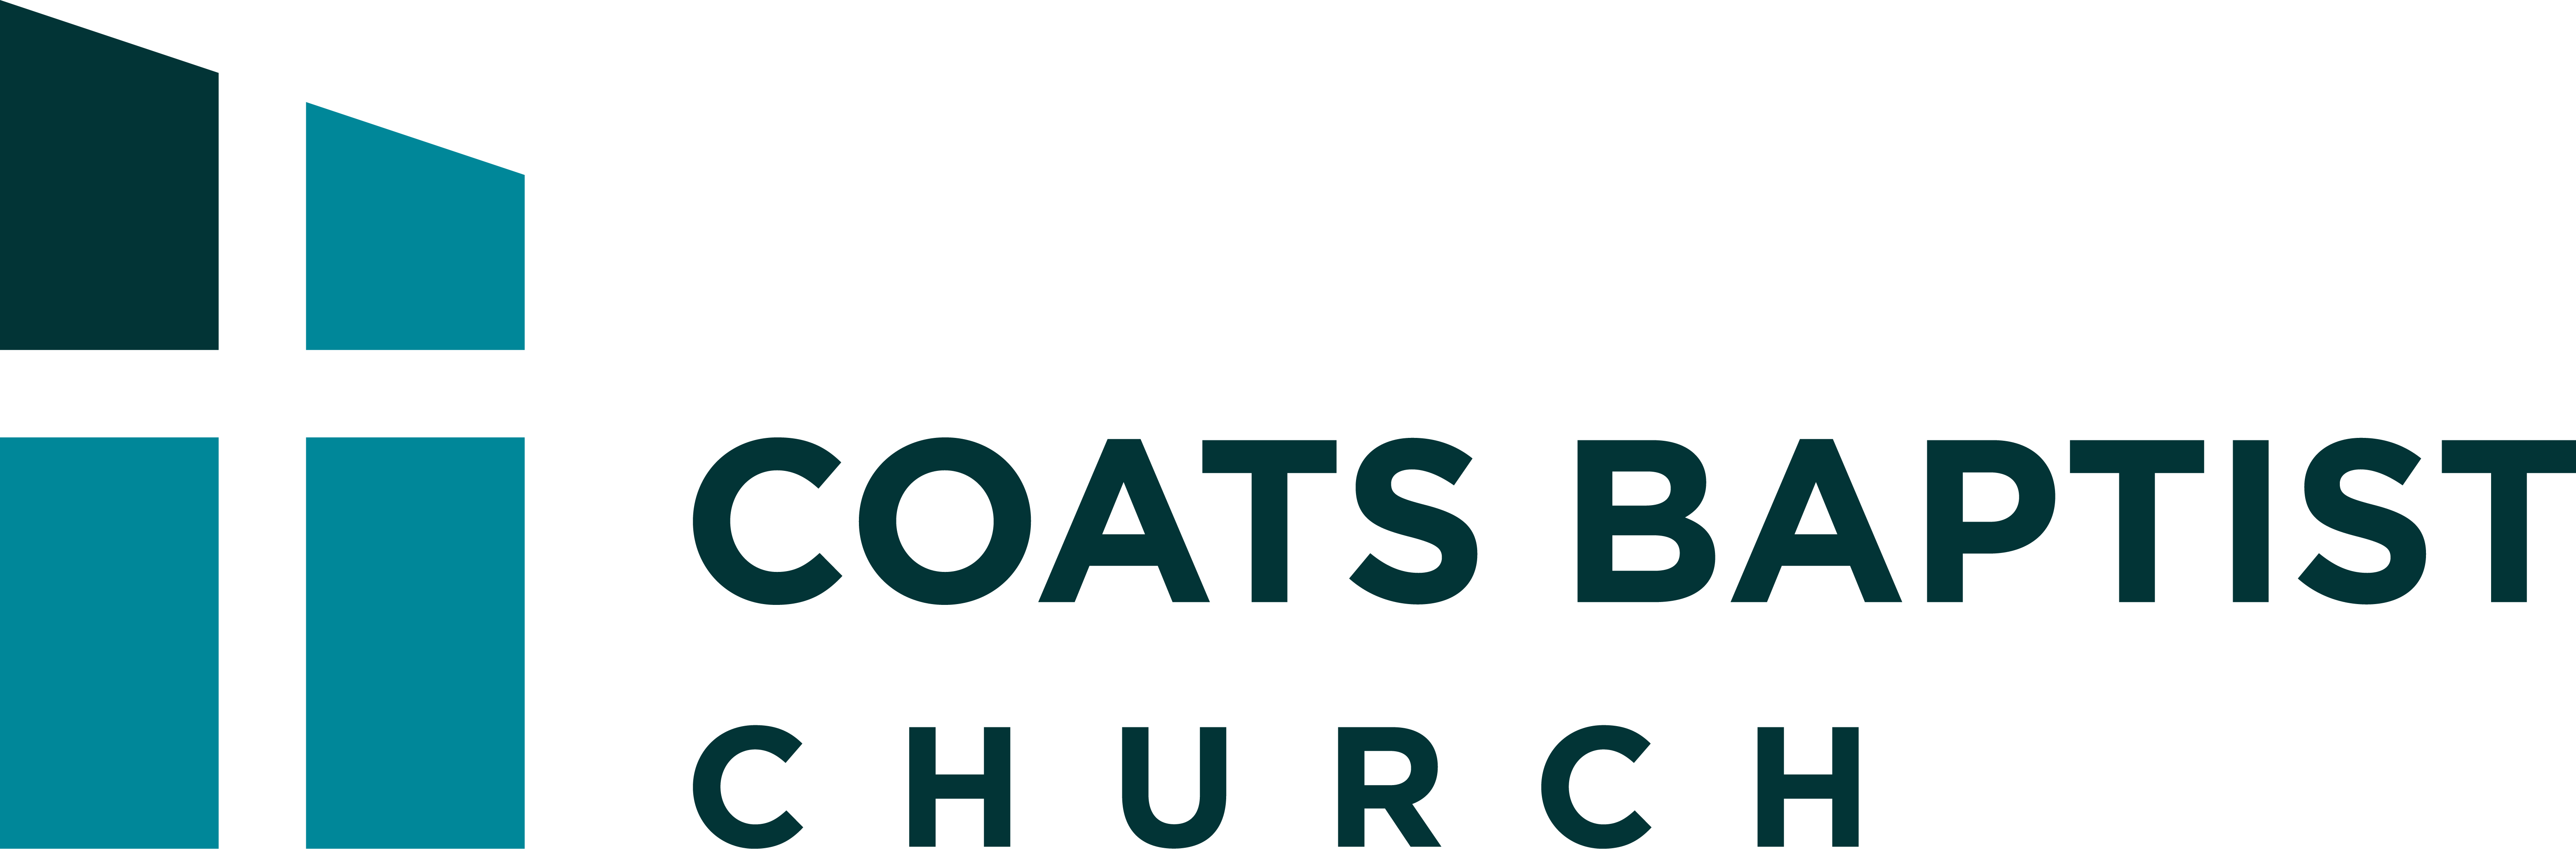 Coats Baptist Church